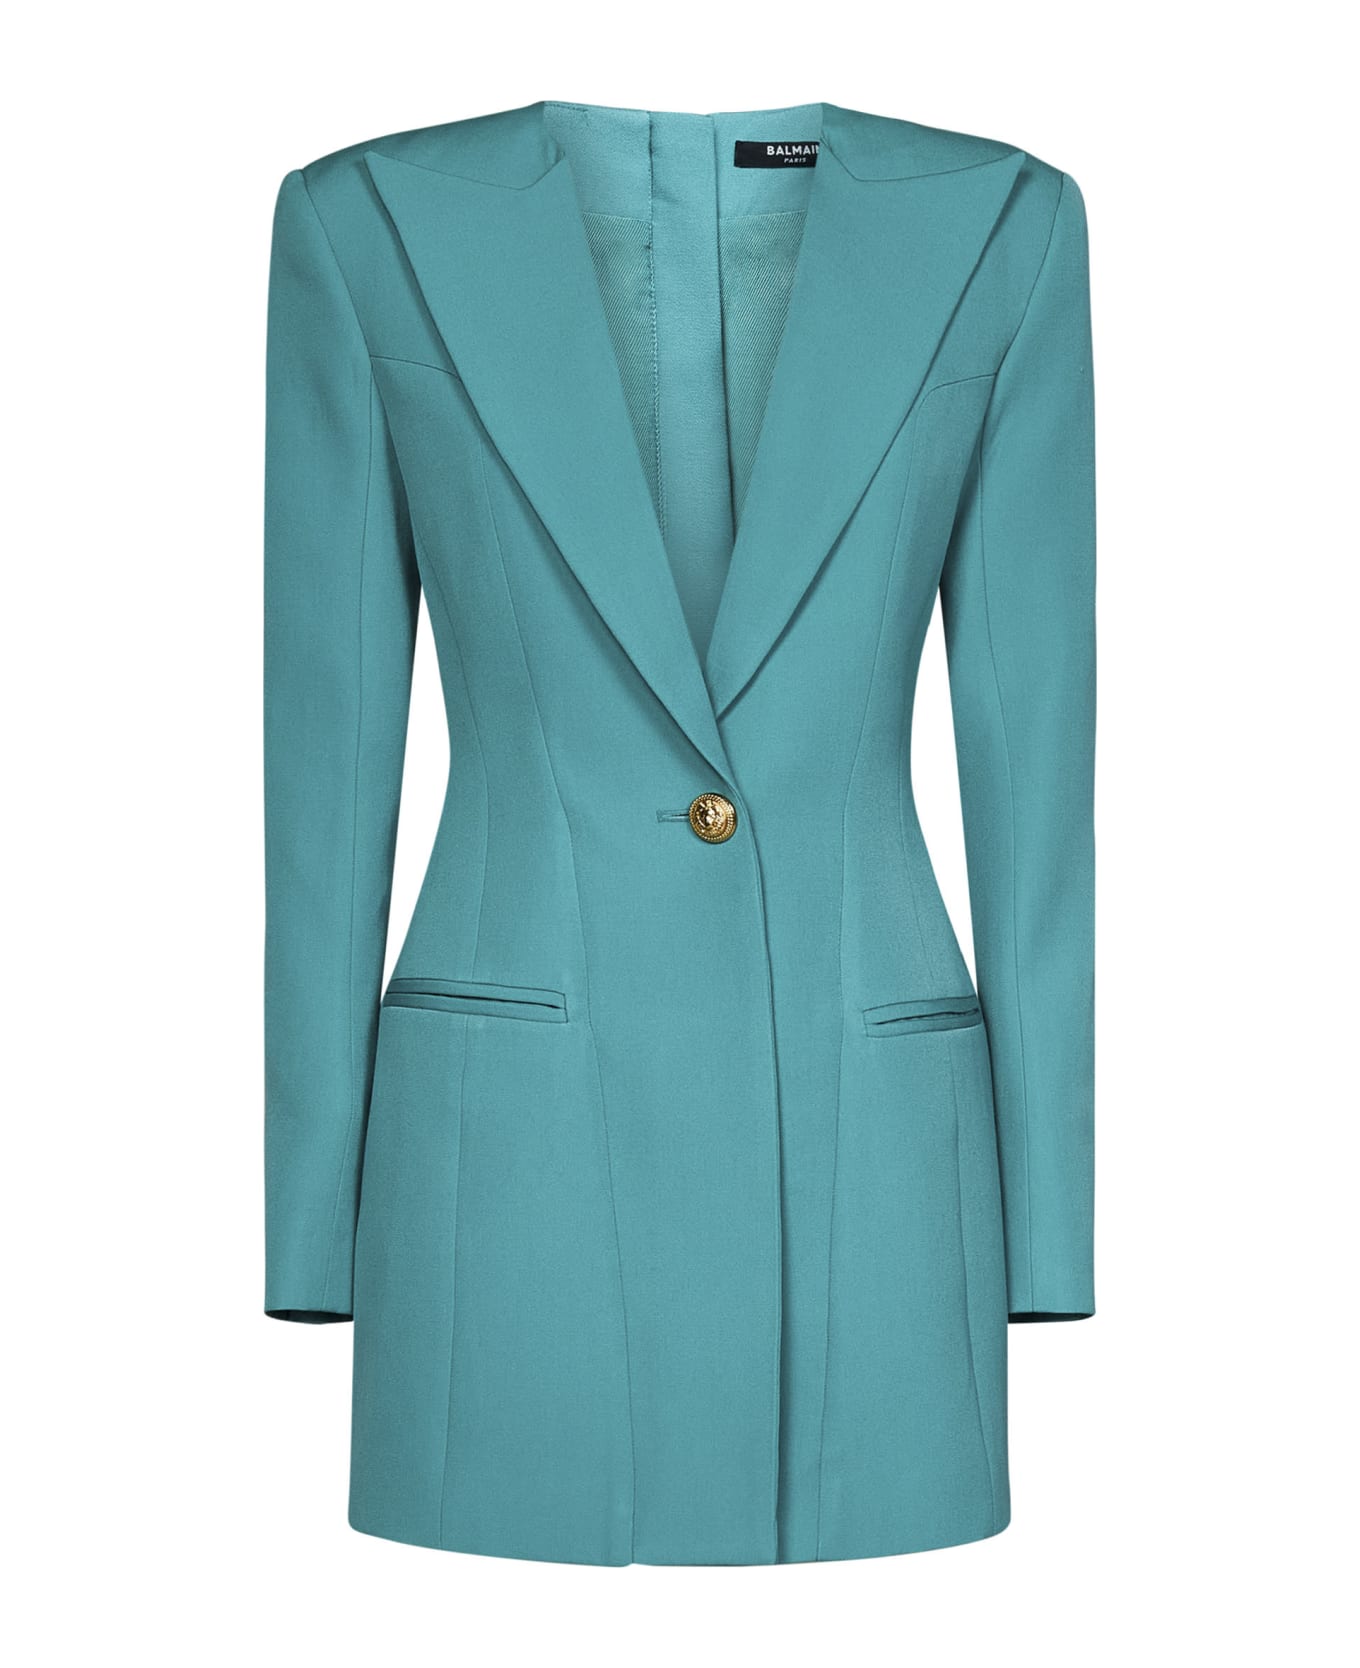 Balmain Light Blue Tailored Blazer Dress With Padded Shoulders In Wool Woman - Green ブレザー